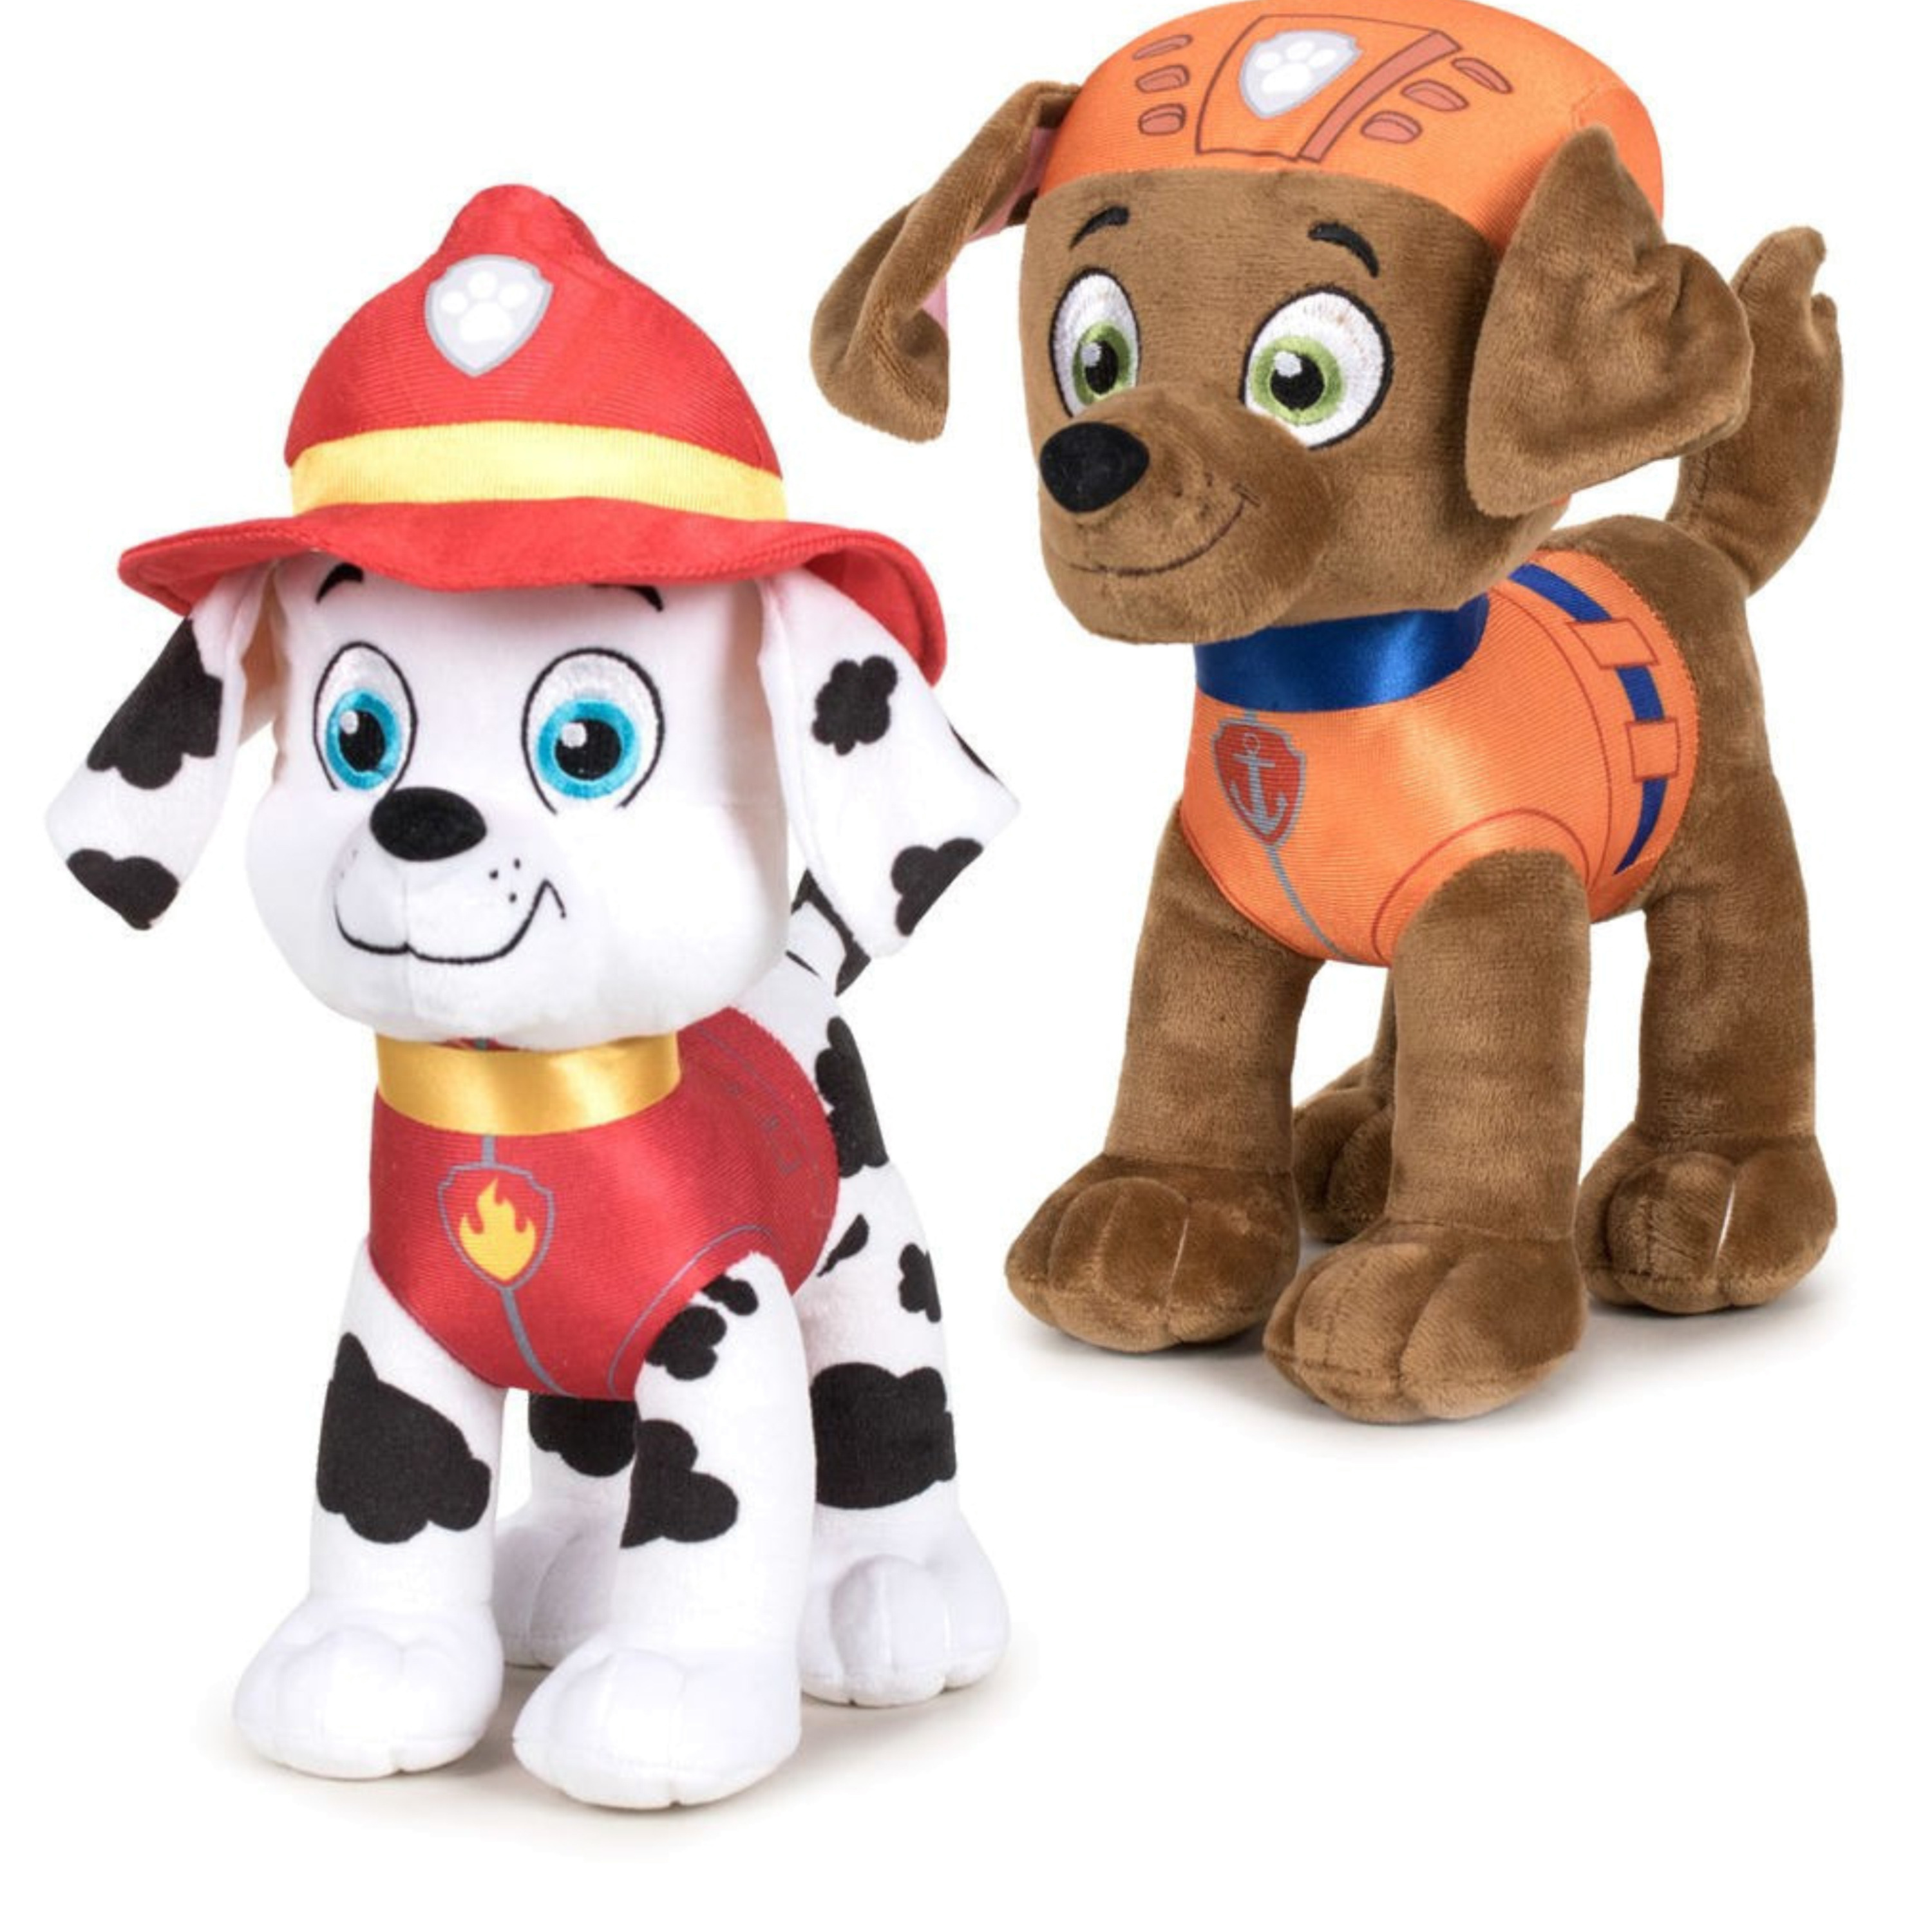 Paw Patrol figuren speelgoed knuffels set van 2x karakters Zuma en Marshall 19 cm -